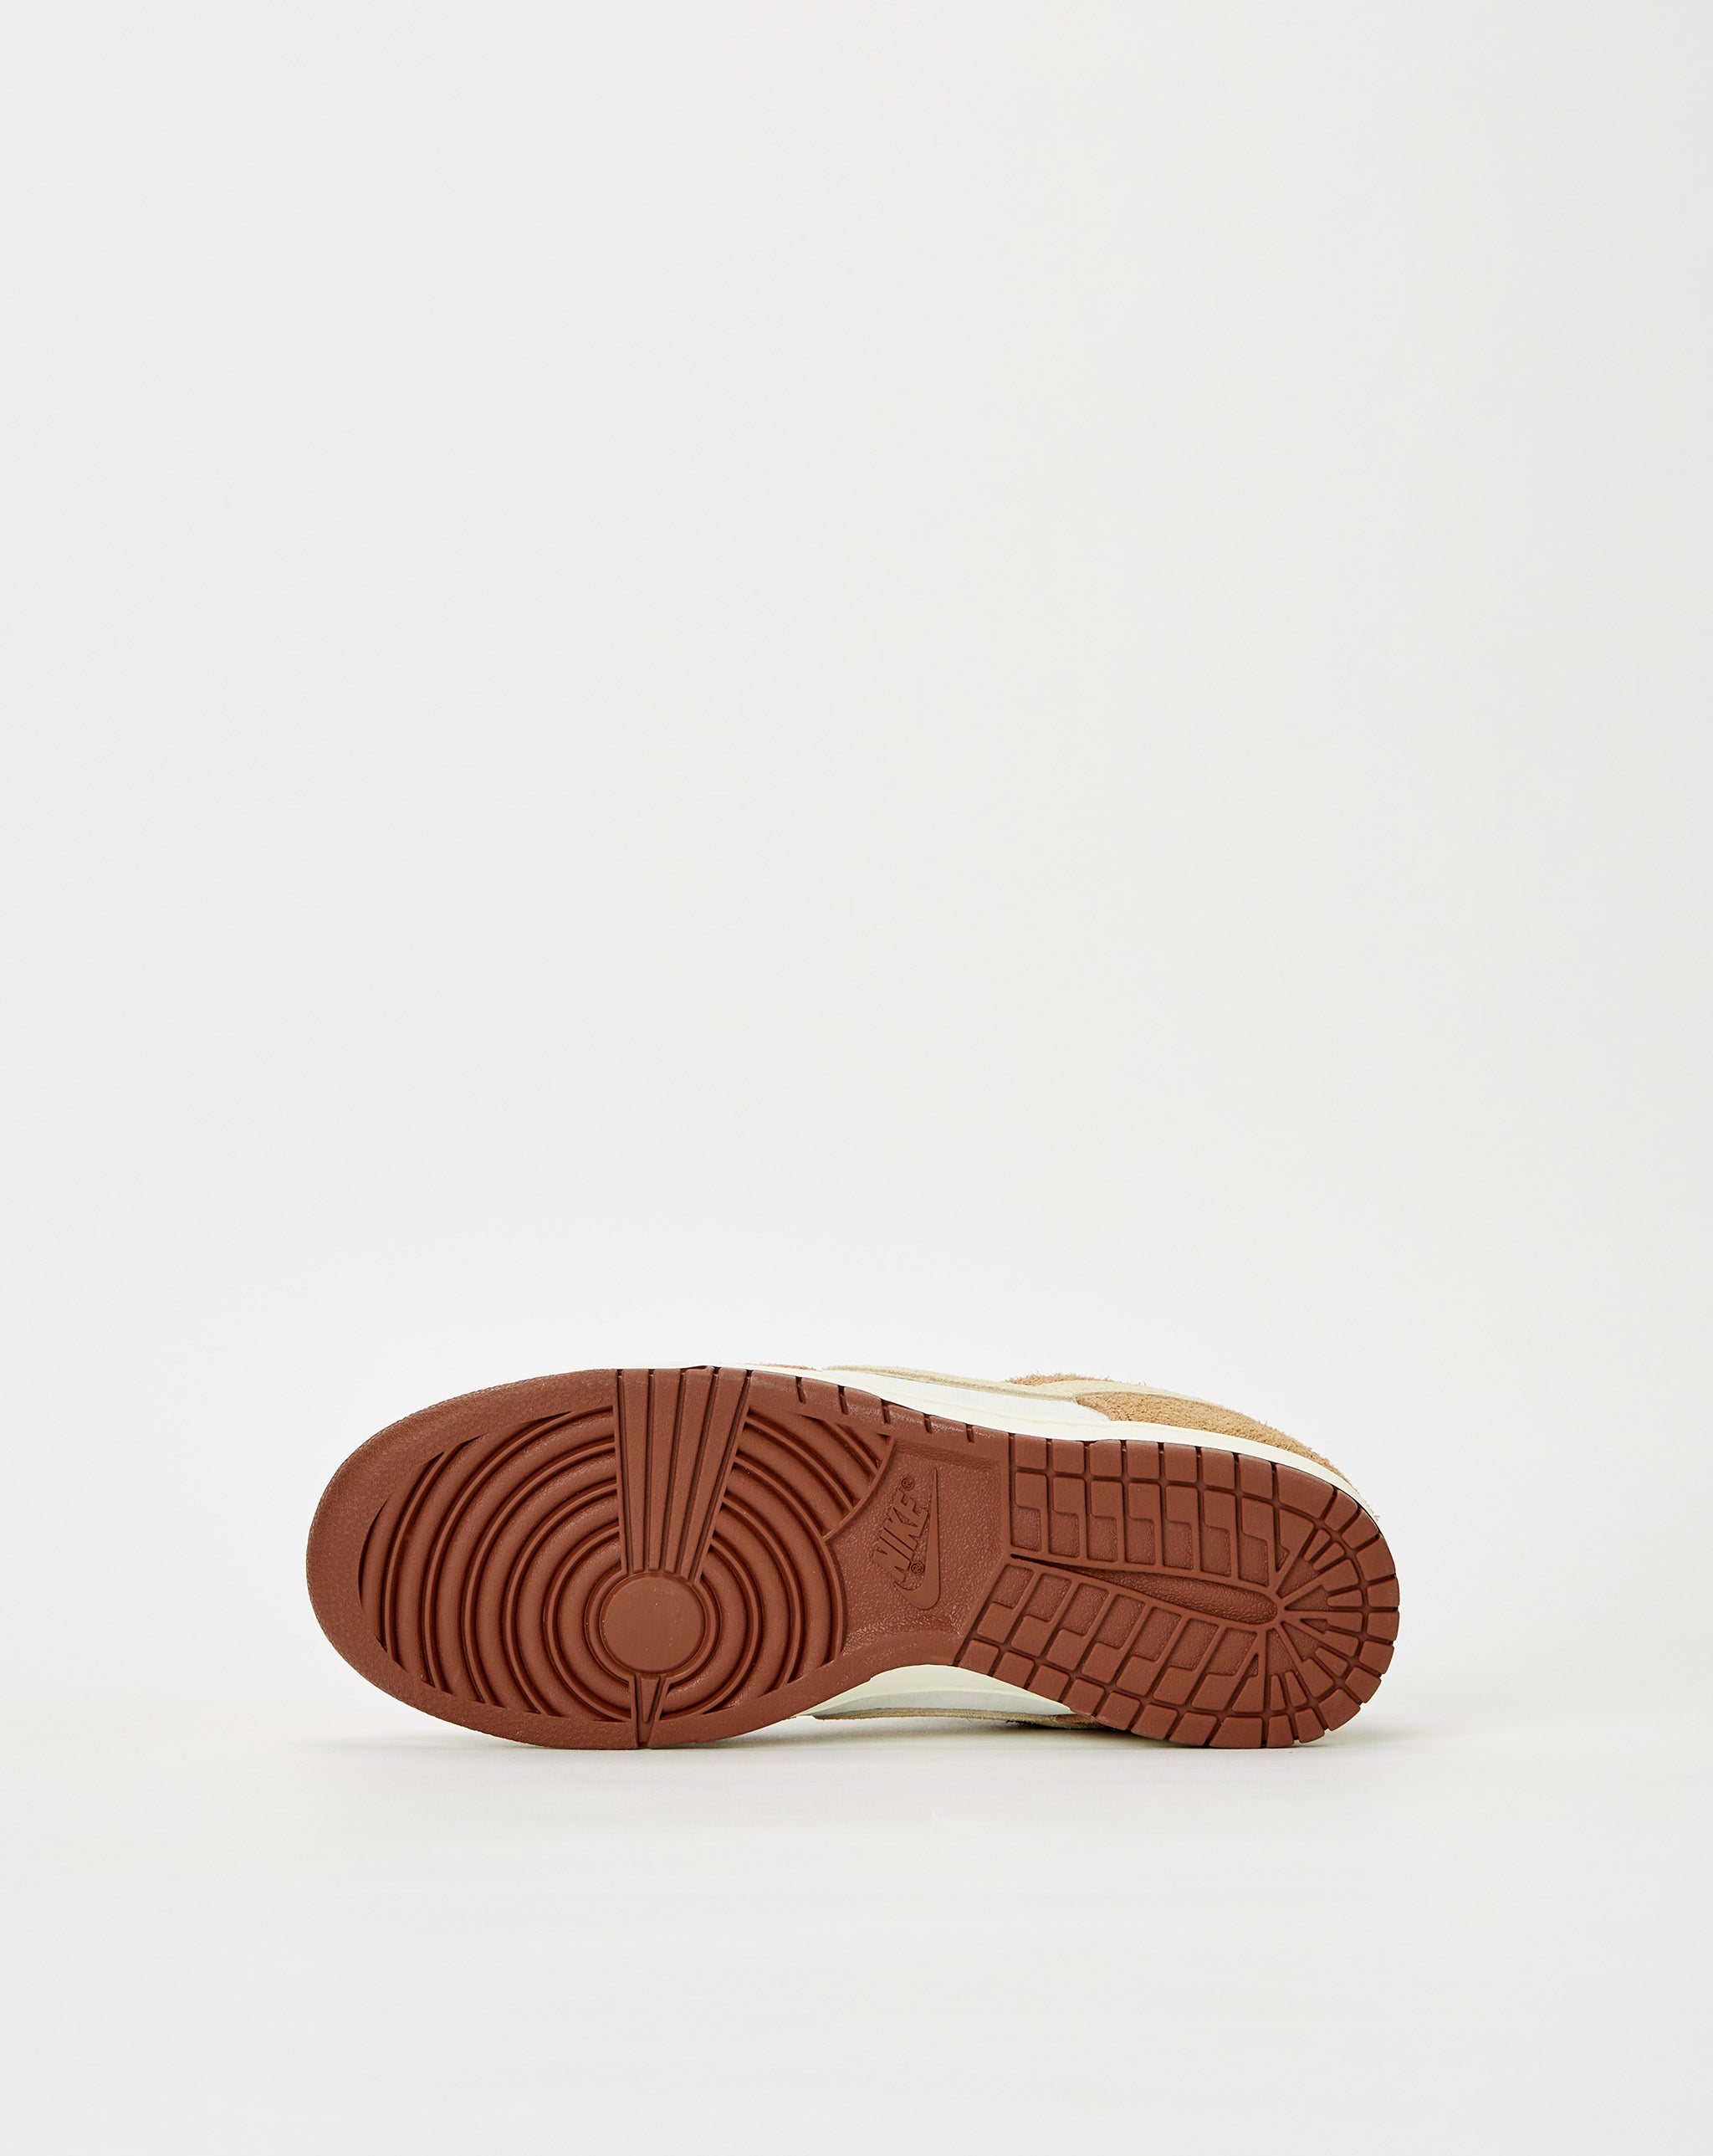 Nike officine creative brown laceless shoes  - Cheap Erlebniswelt-fliegenfischen Jordan outlet